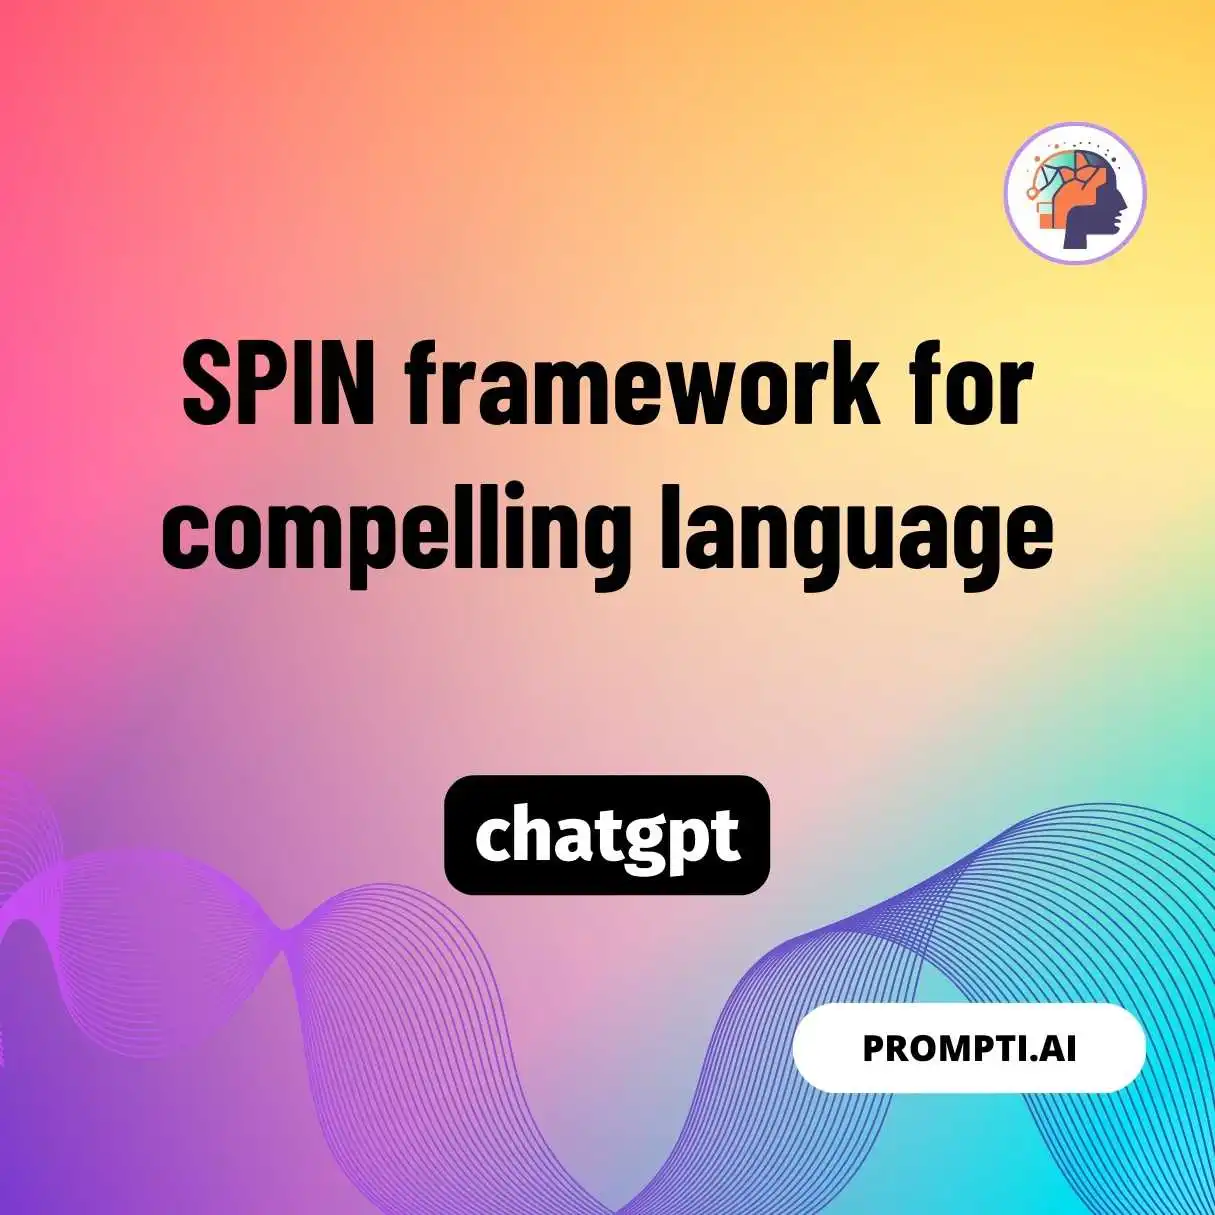 SPIN framework for compelling language